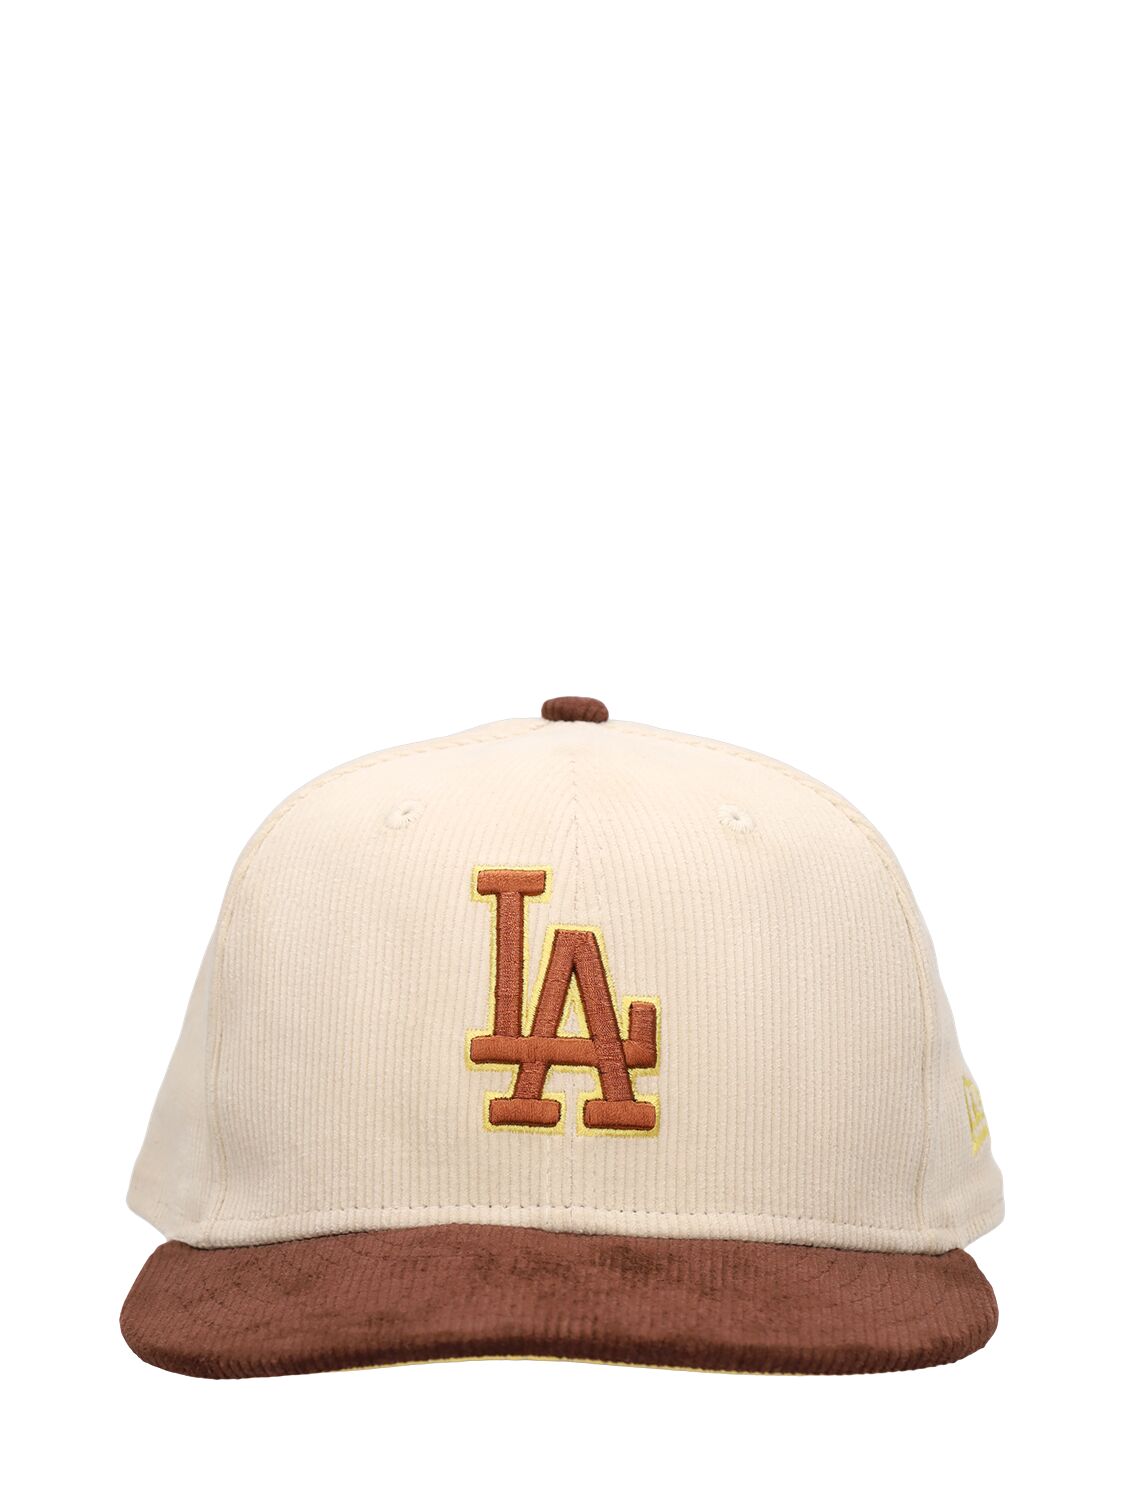 New Era La Dodgers 59fifty棒球帽 In Beige,brown